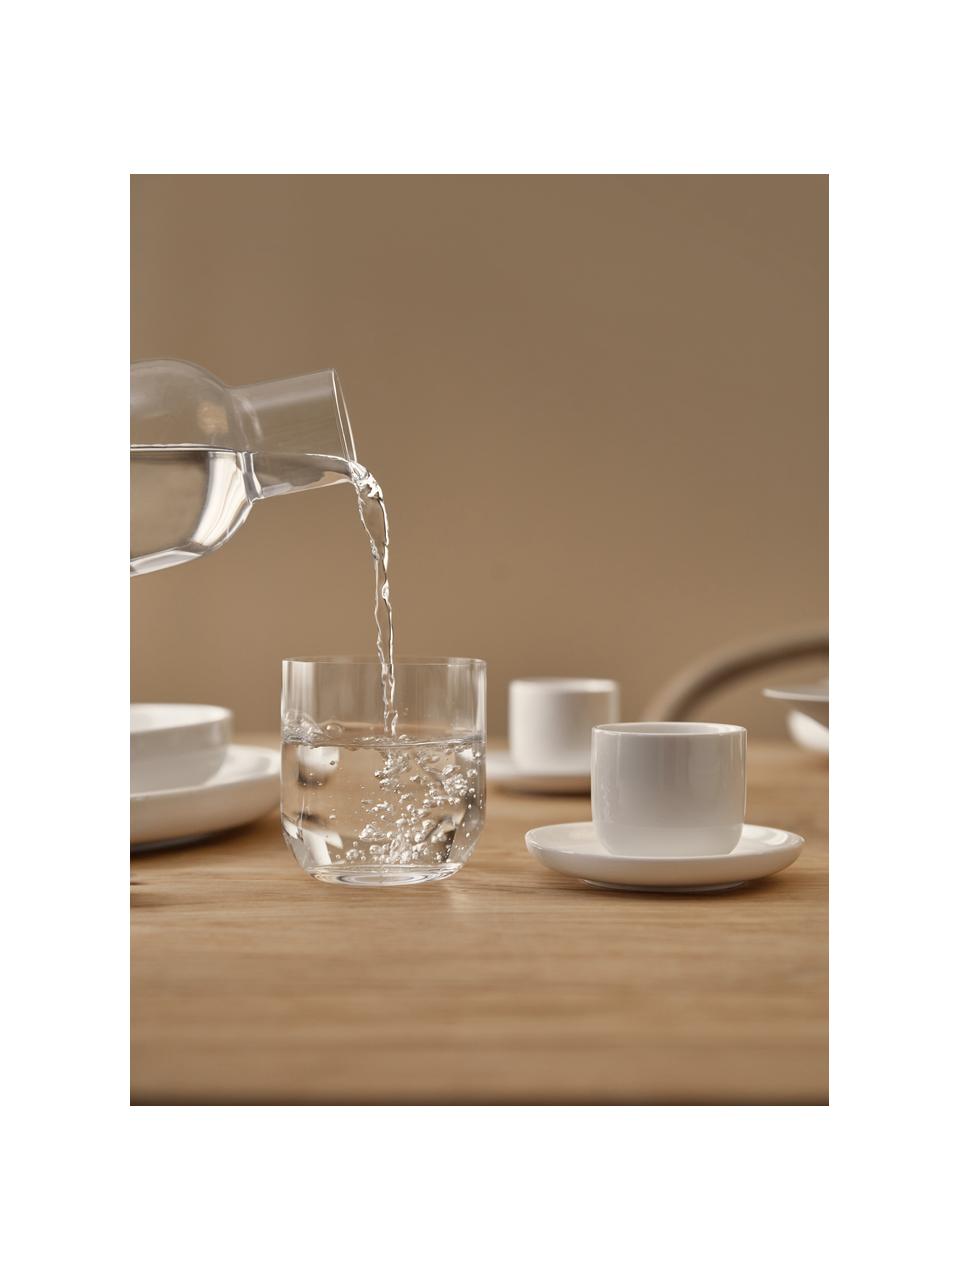 Bicchieri Eleia 4 pz, Cristallo, Trasparente, Ø 7 x Alt. 9 cm, 330 ml